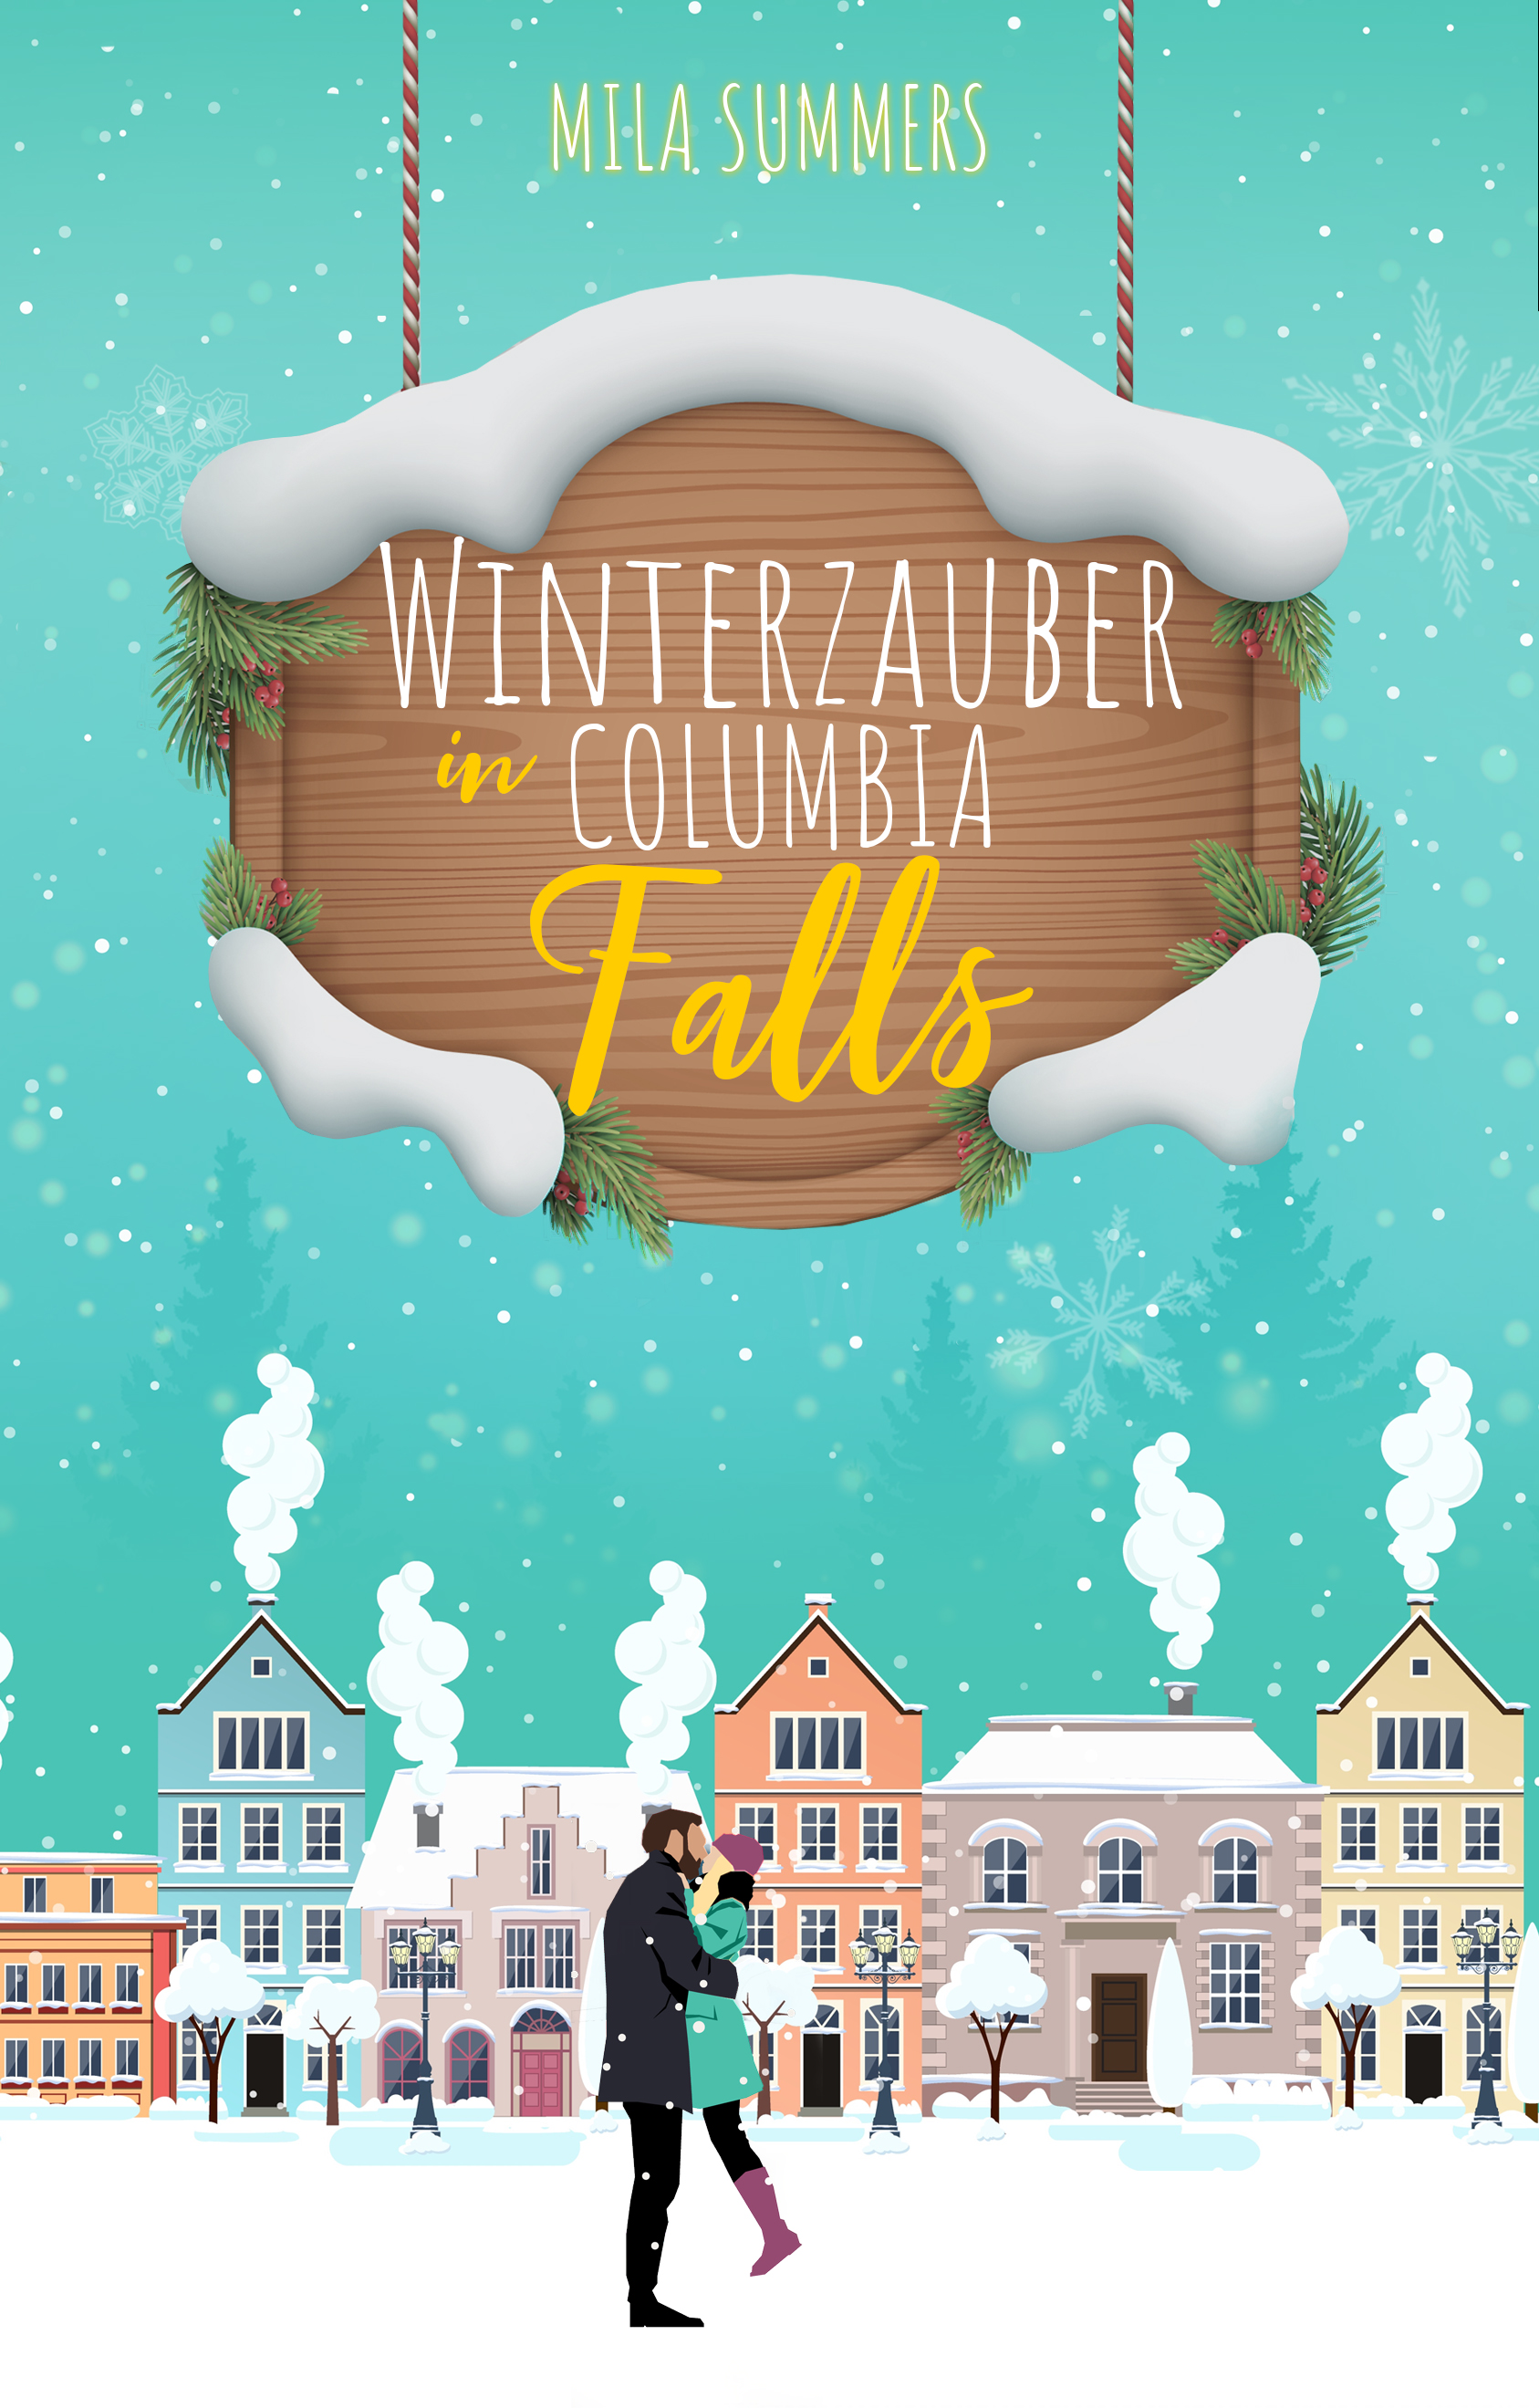 Winterzauber in Columbia Falls